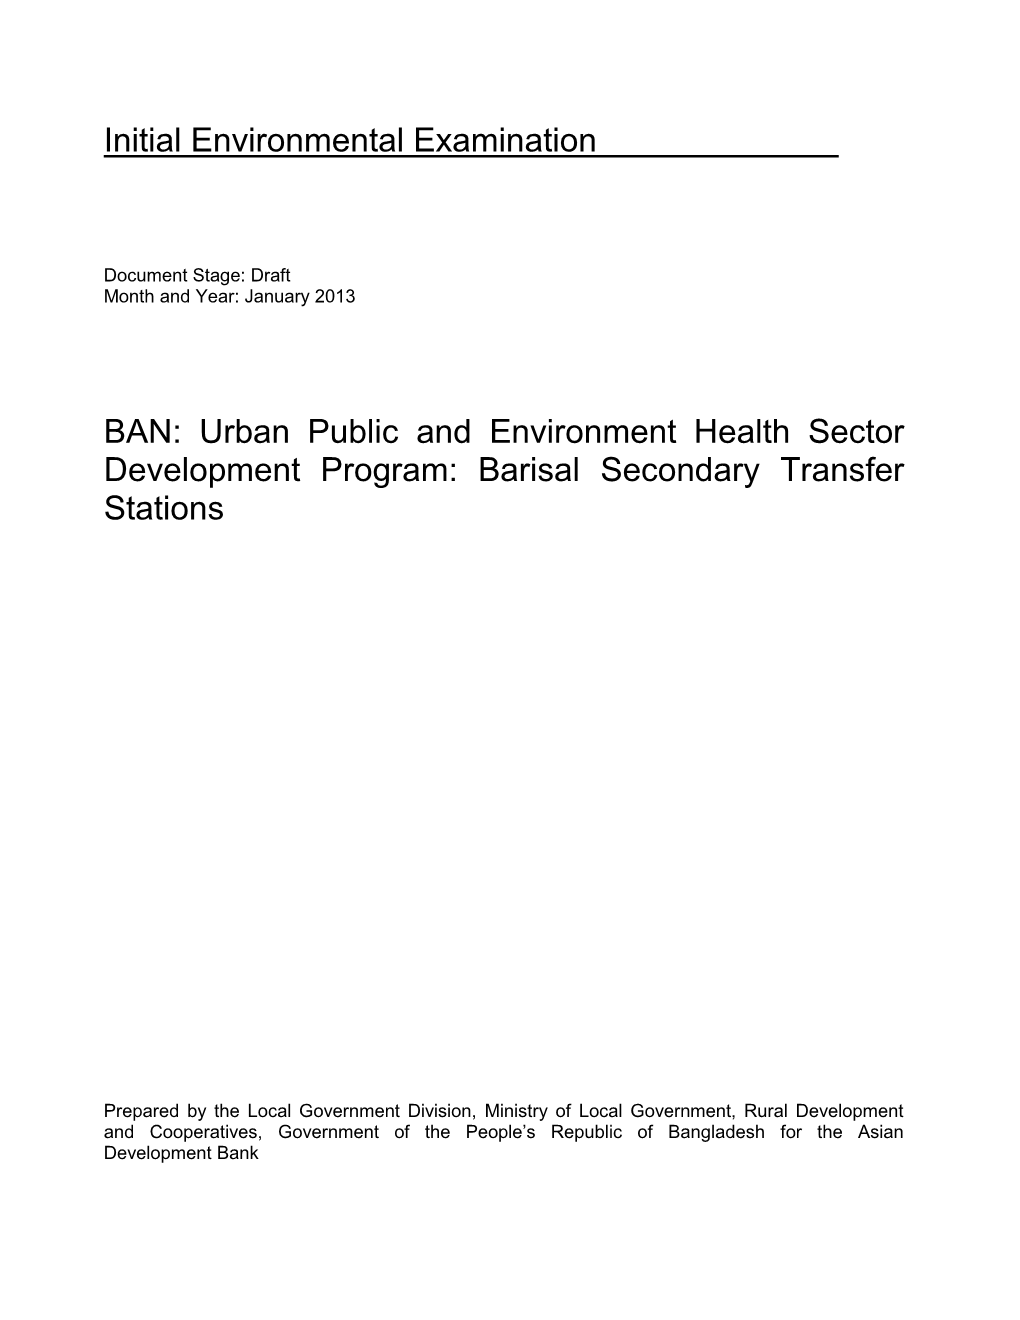 Initial Environmental Examination BAN: Urban Public And